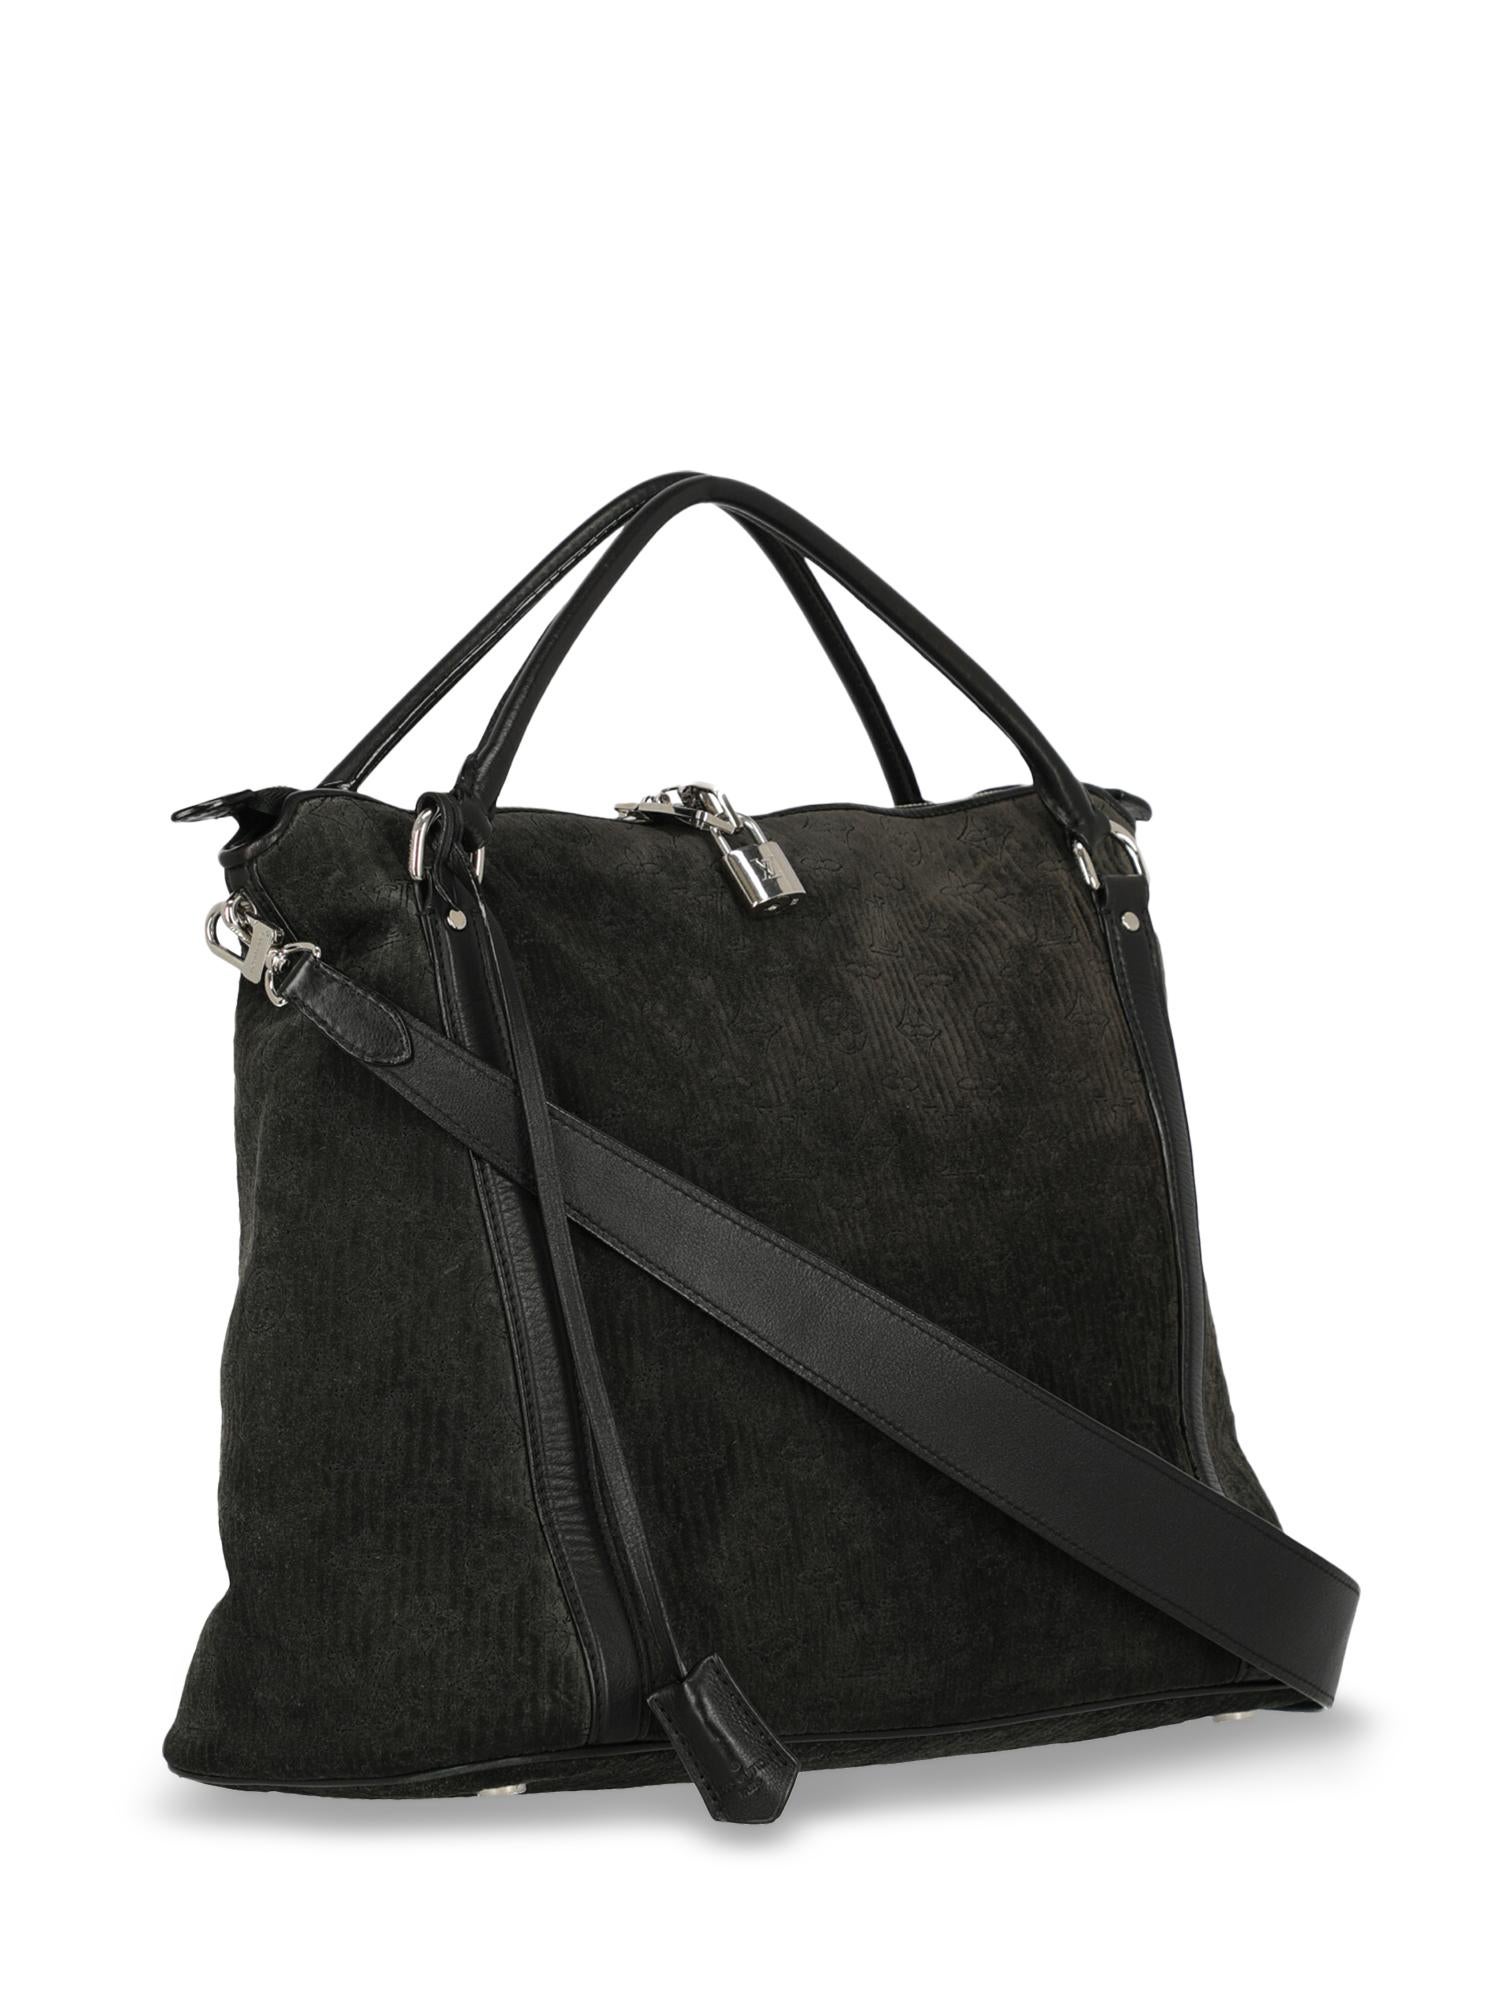 Louis Vuitton Woman Handbag Black  In Fair Condition For Sale In Milan, IT